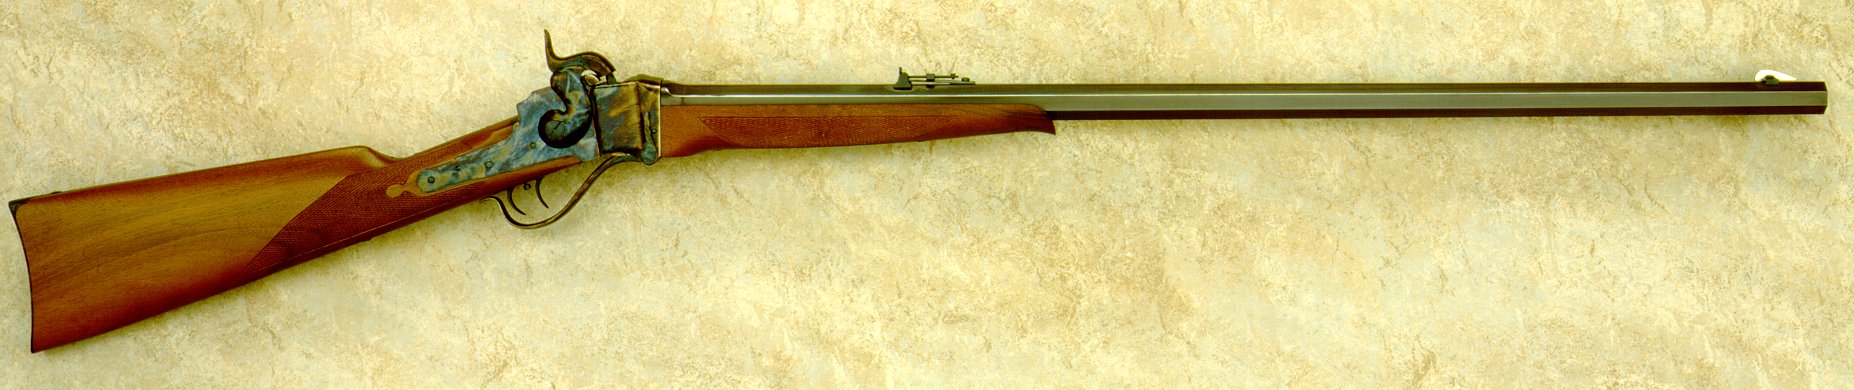 The Sharps rifle.